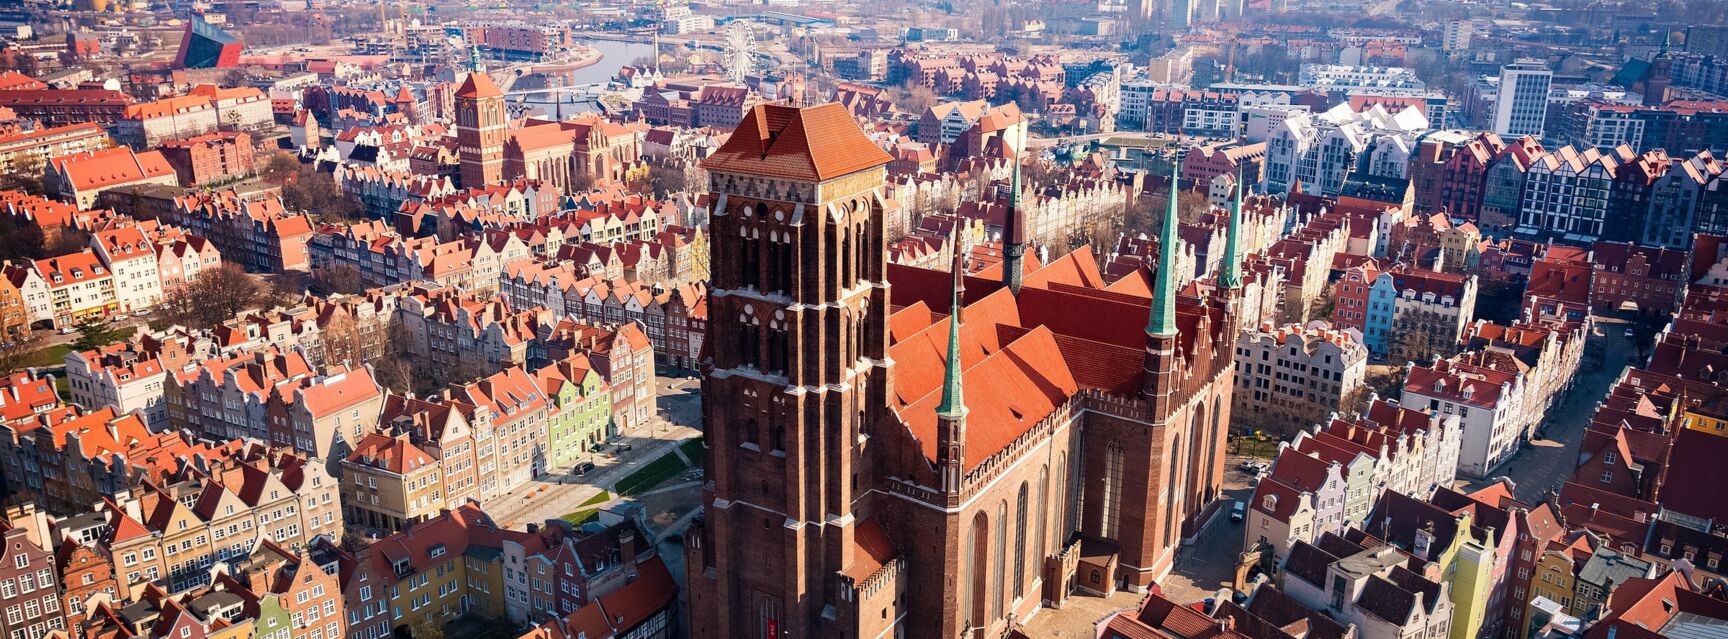 St. Mary's Basilica ©Visit Gdansk